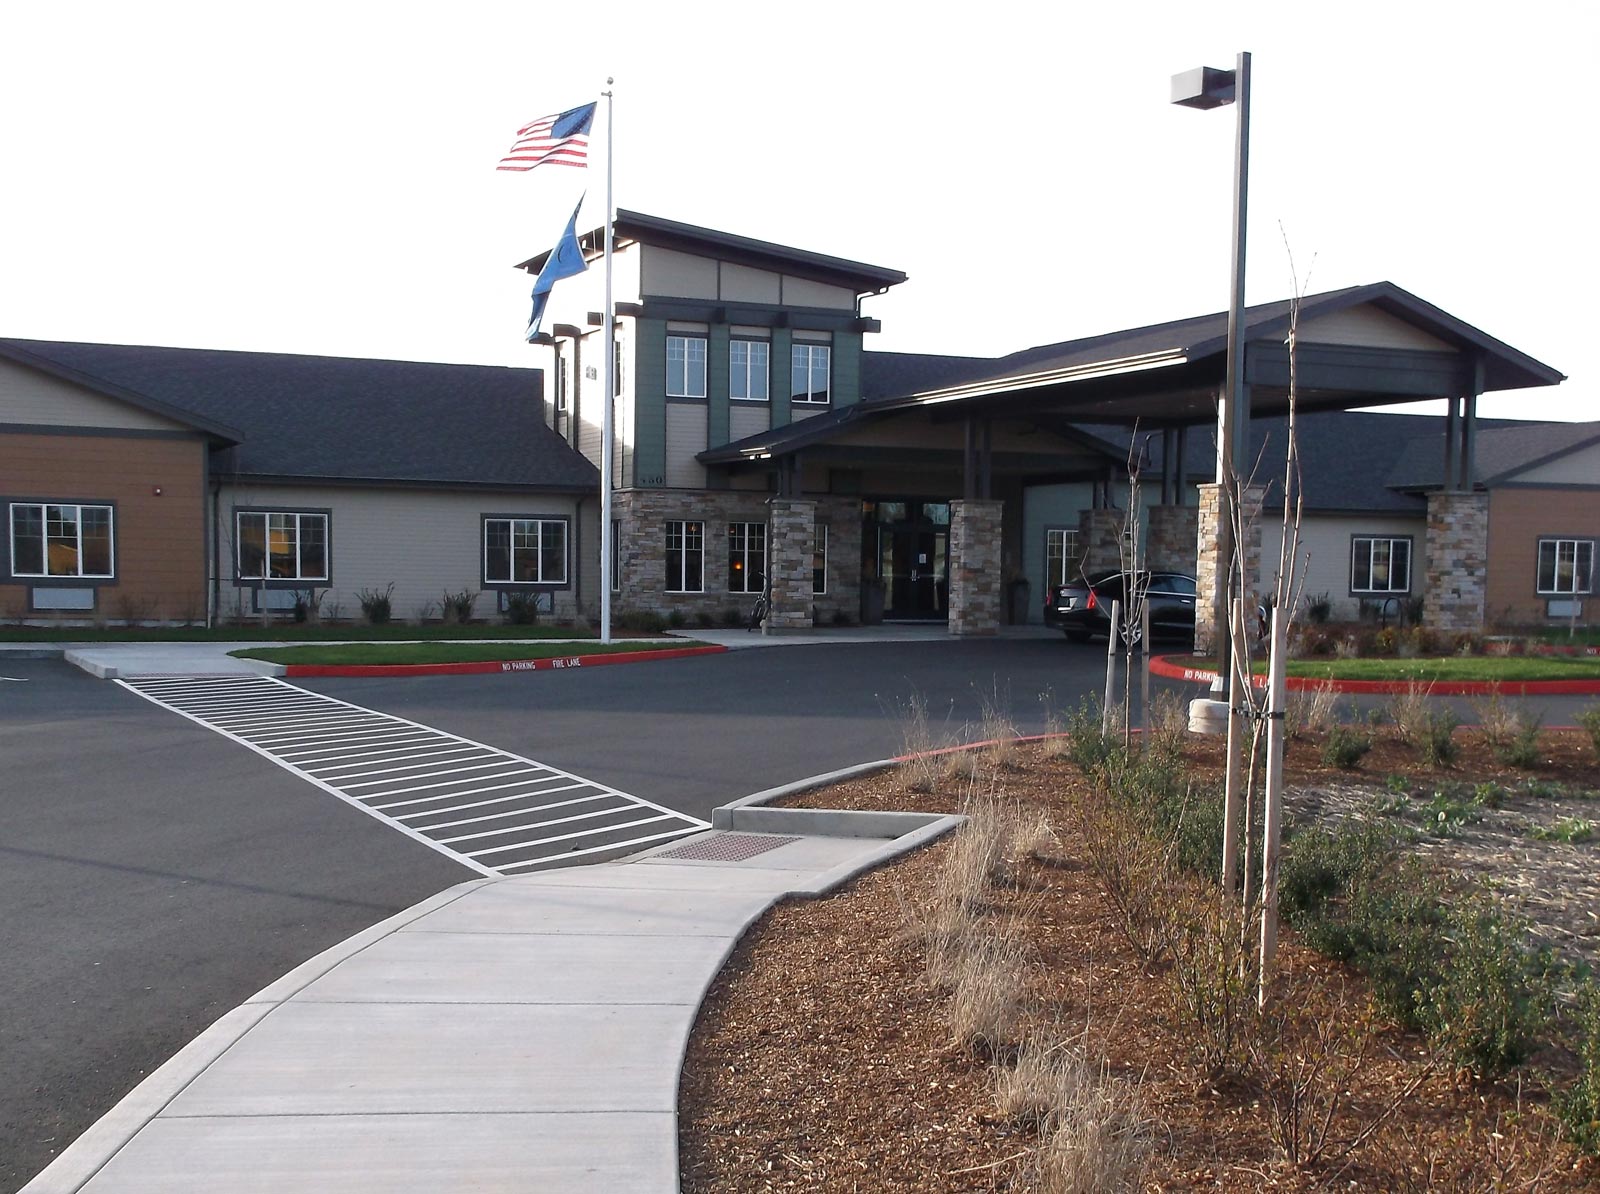 Avamere, memory care facility, landscape, parking lot, entrance